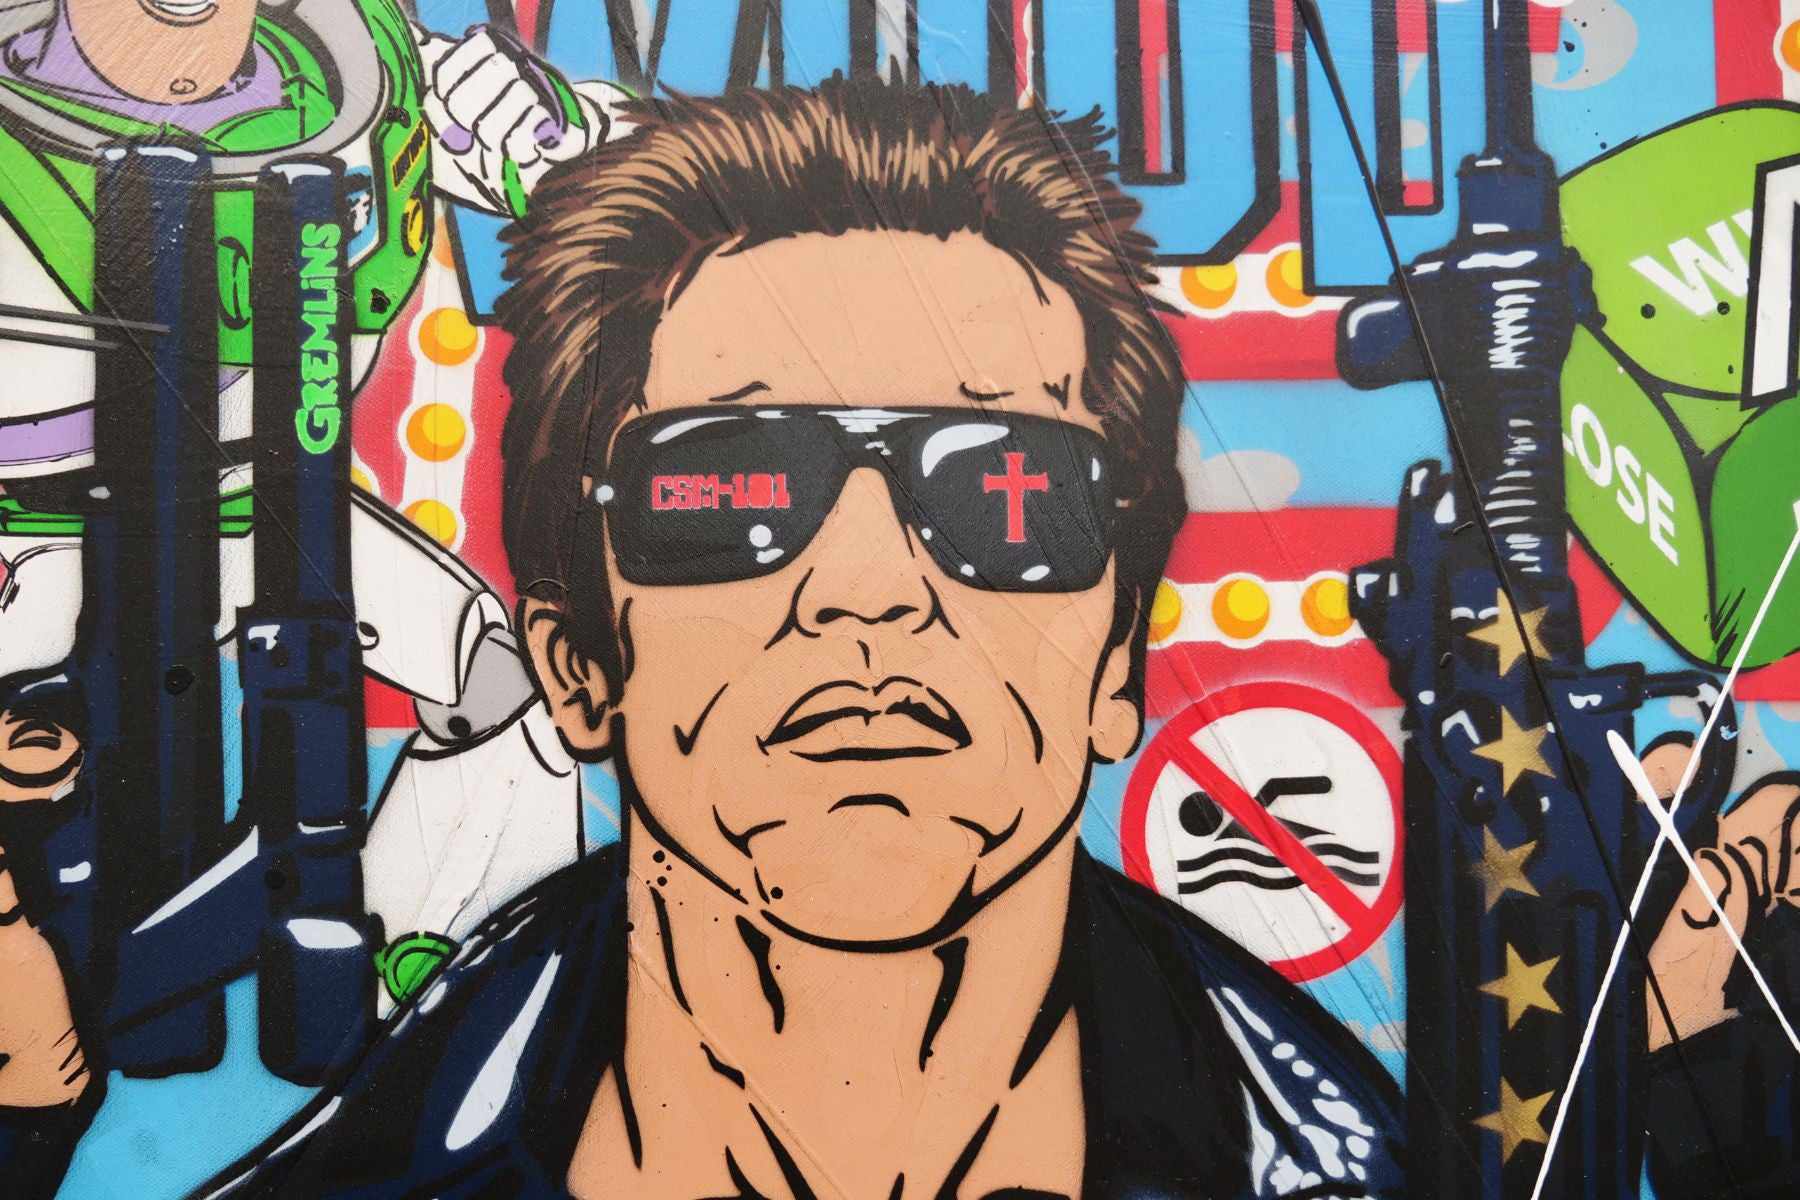 Godly Cinematica 240cm x 100cm Godfather Terminator Textured Movies Urban Pop Art Painting (SOLD)